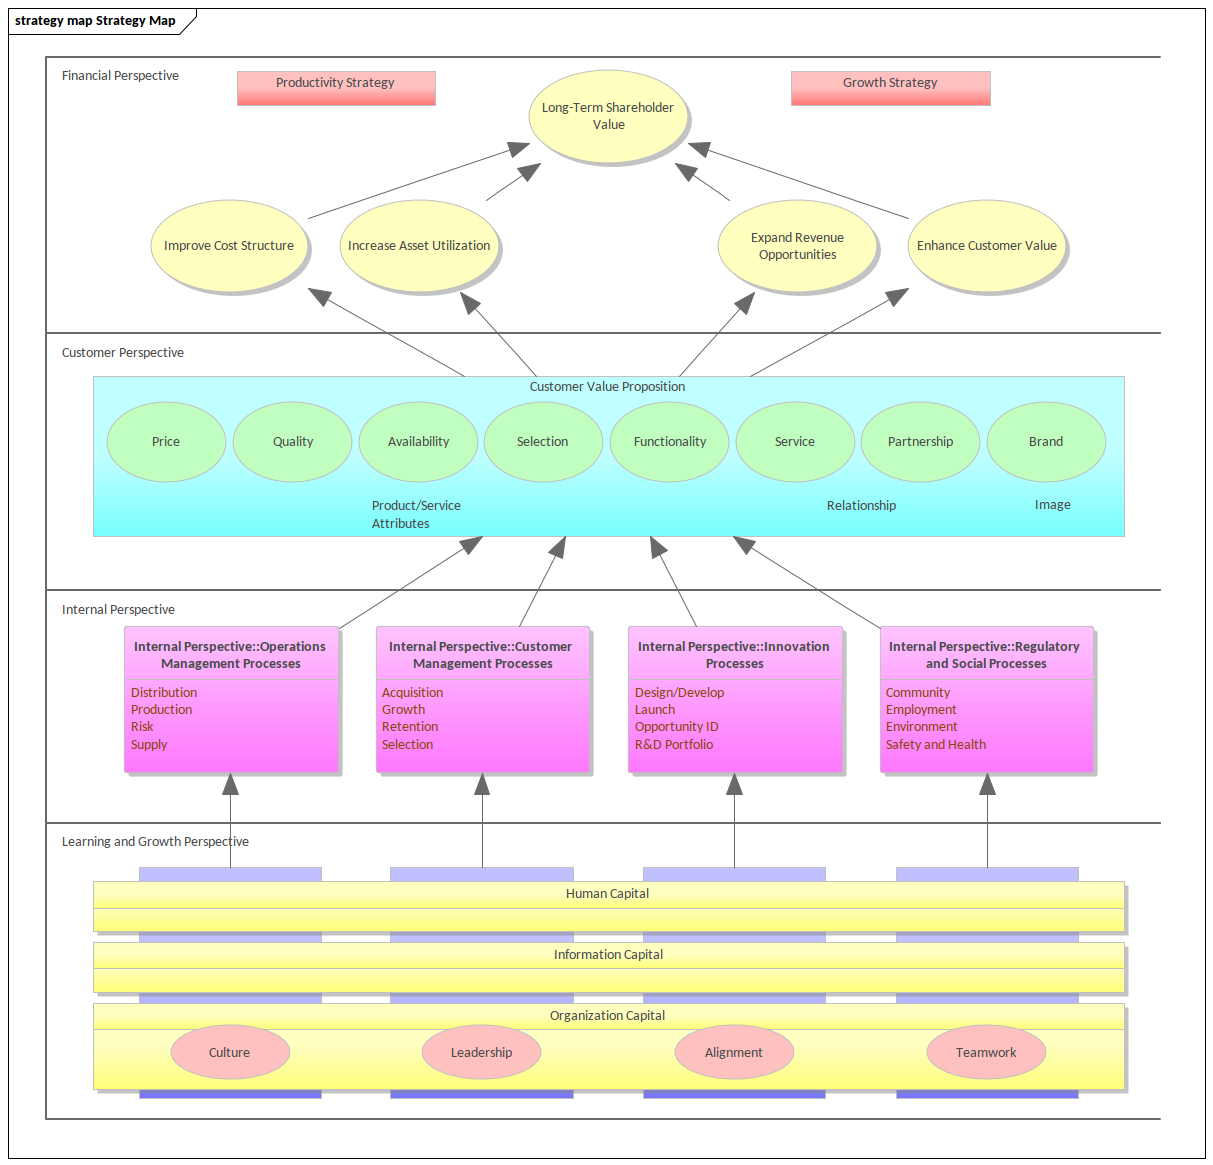 Enterprise Architecture - Strategy Map